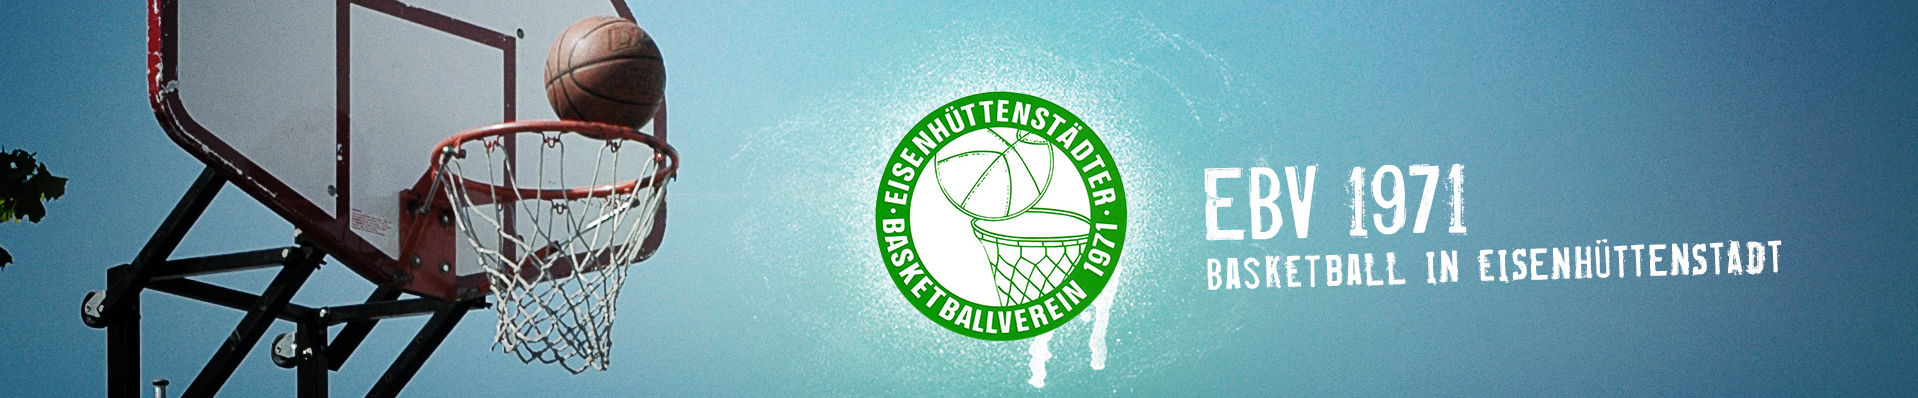 Eisenhüttenstädter Basketballverein 1971 e.V.